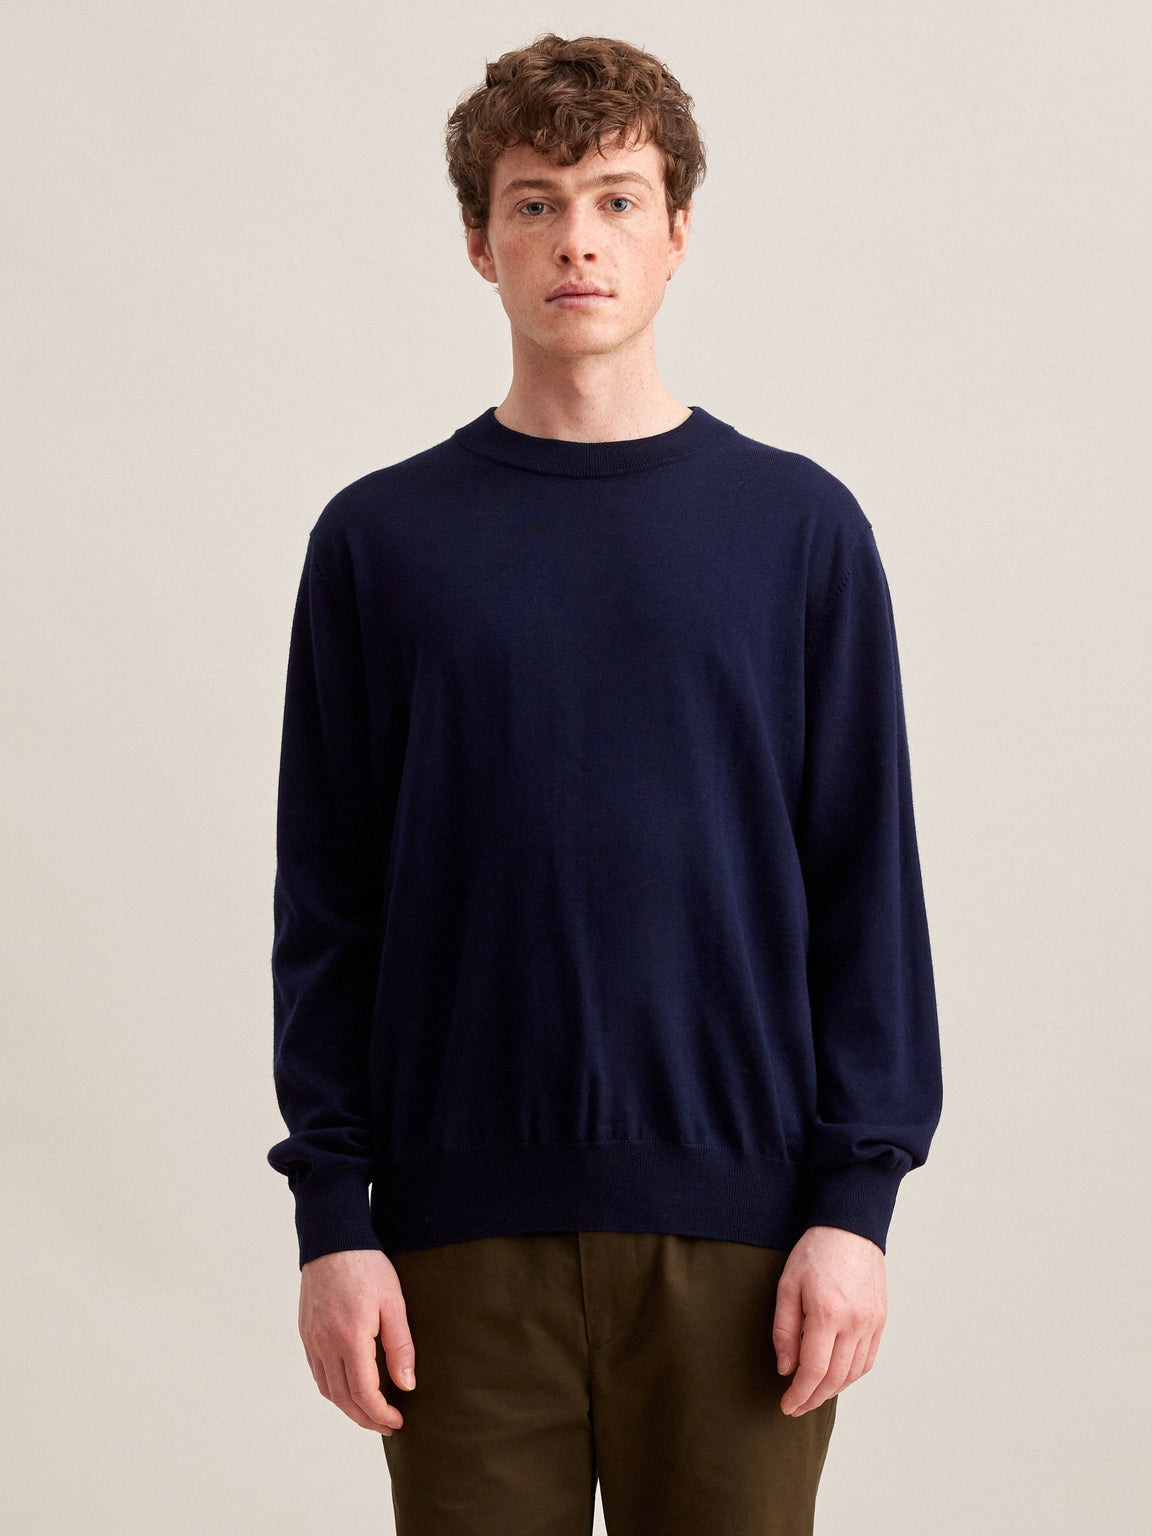 Dilliv sweater - Brown - Bellerose - Men Wool